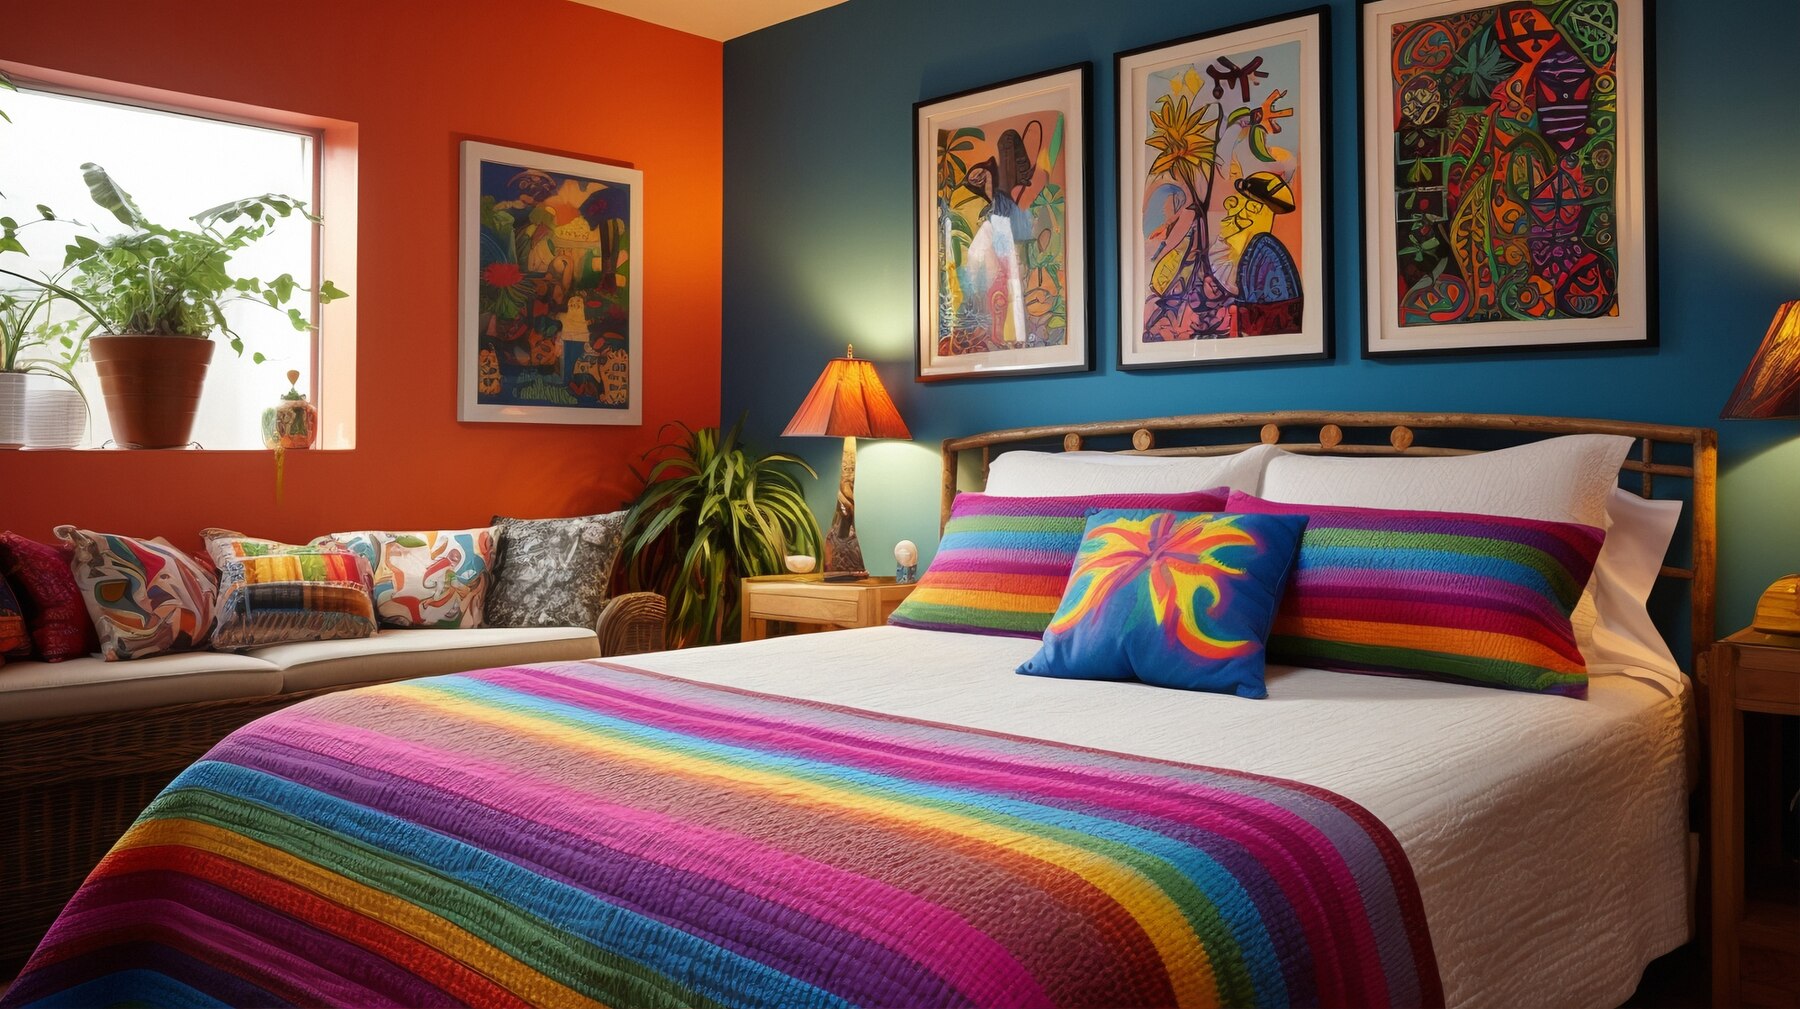 Vastu Colours for Bedroom